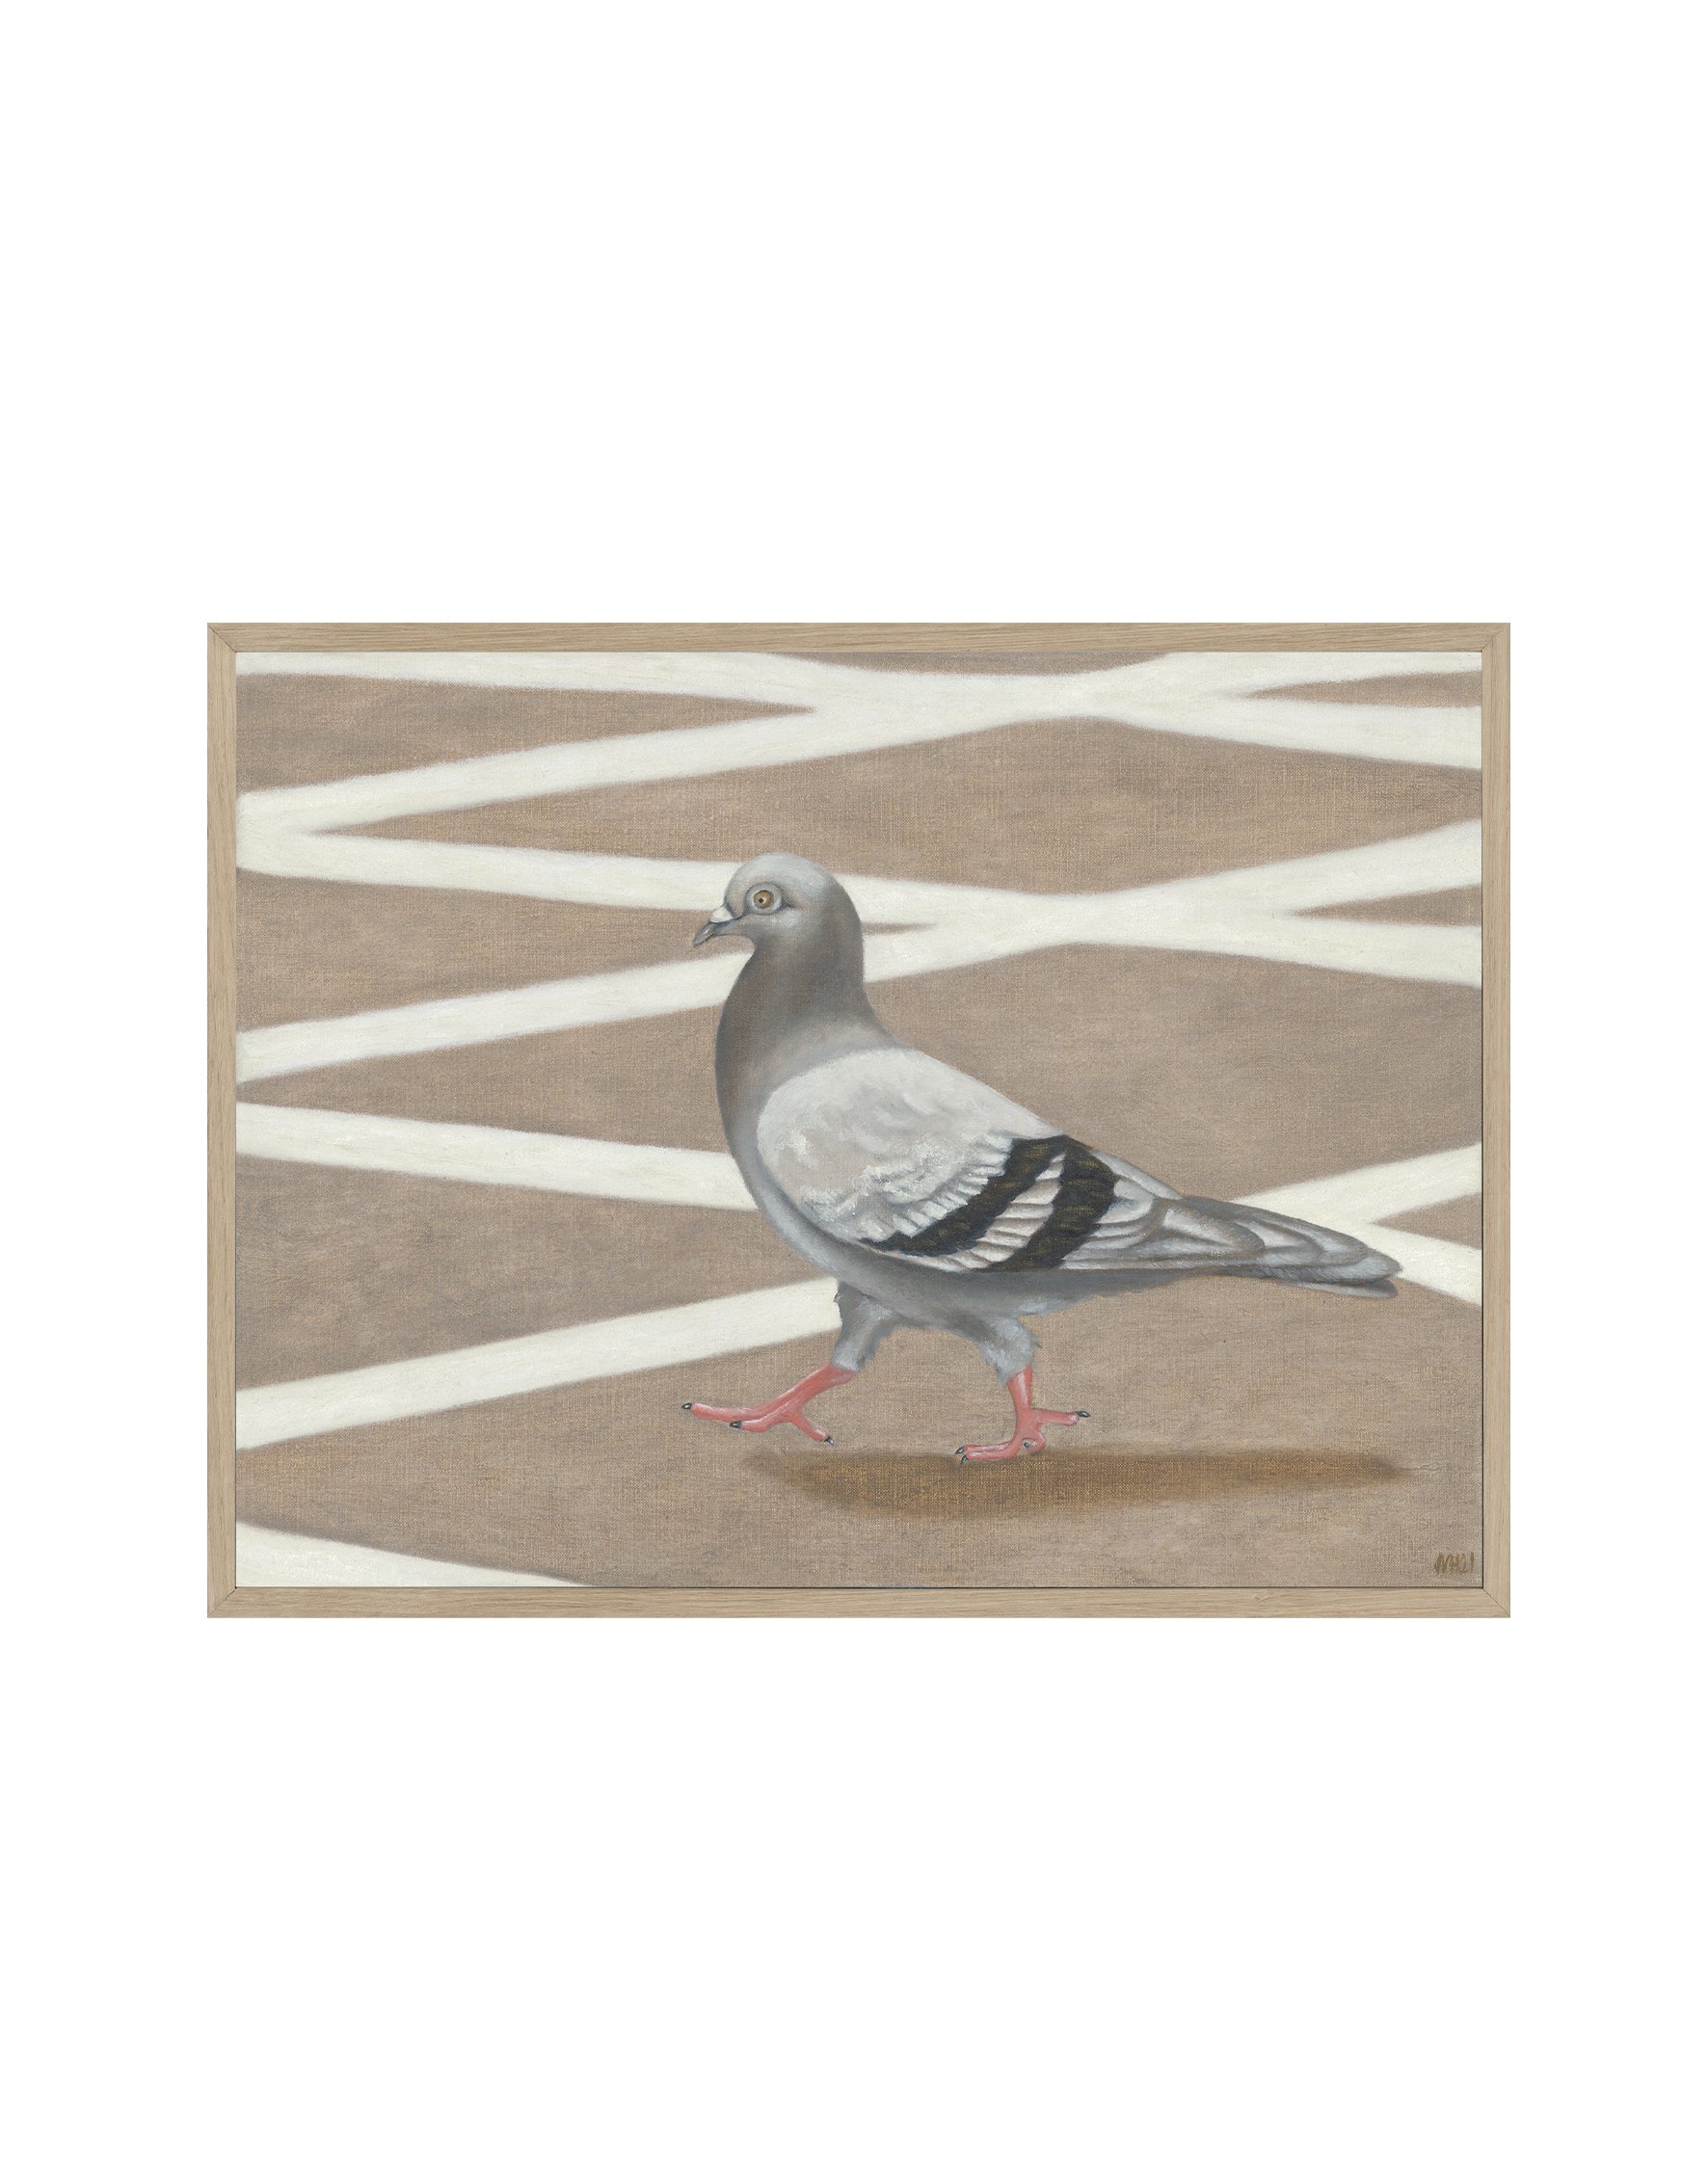 Title: London Pigeon